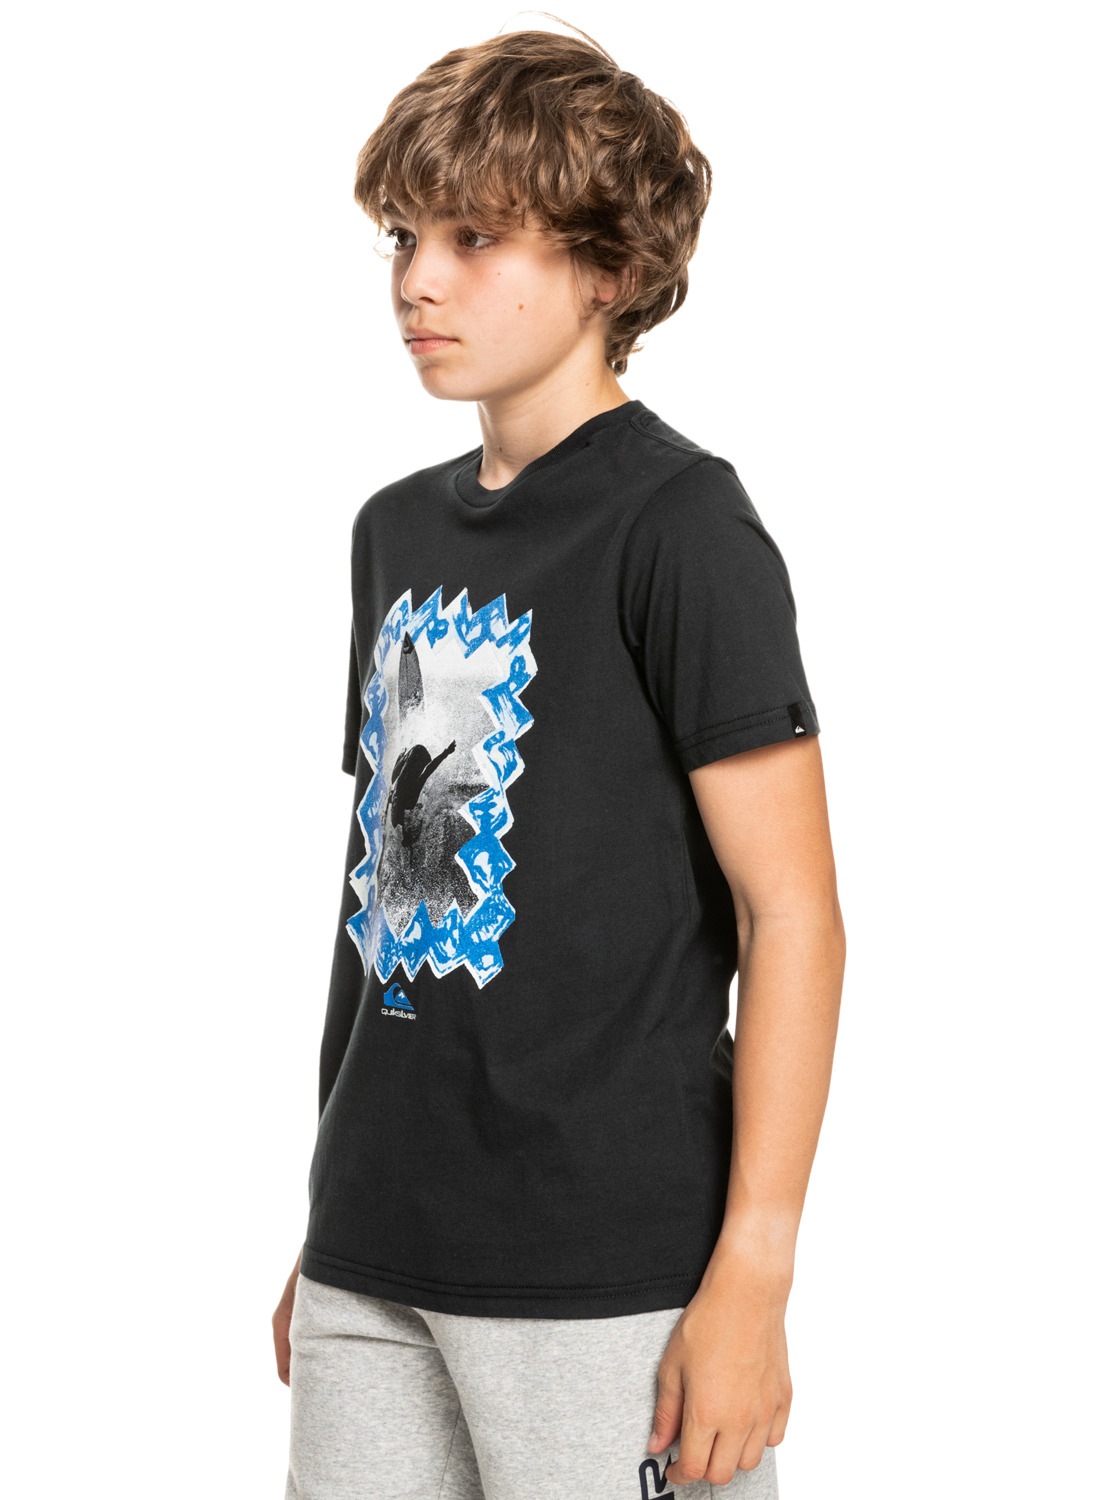 | kaufen »Future Quiksilver Islands« online T-Shirt BAUR